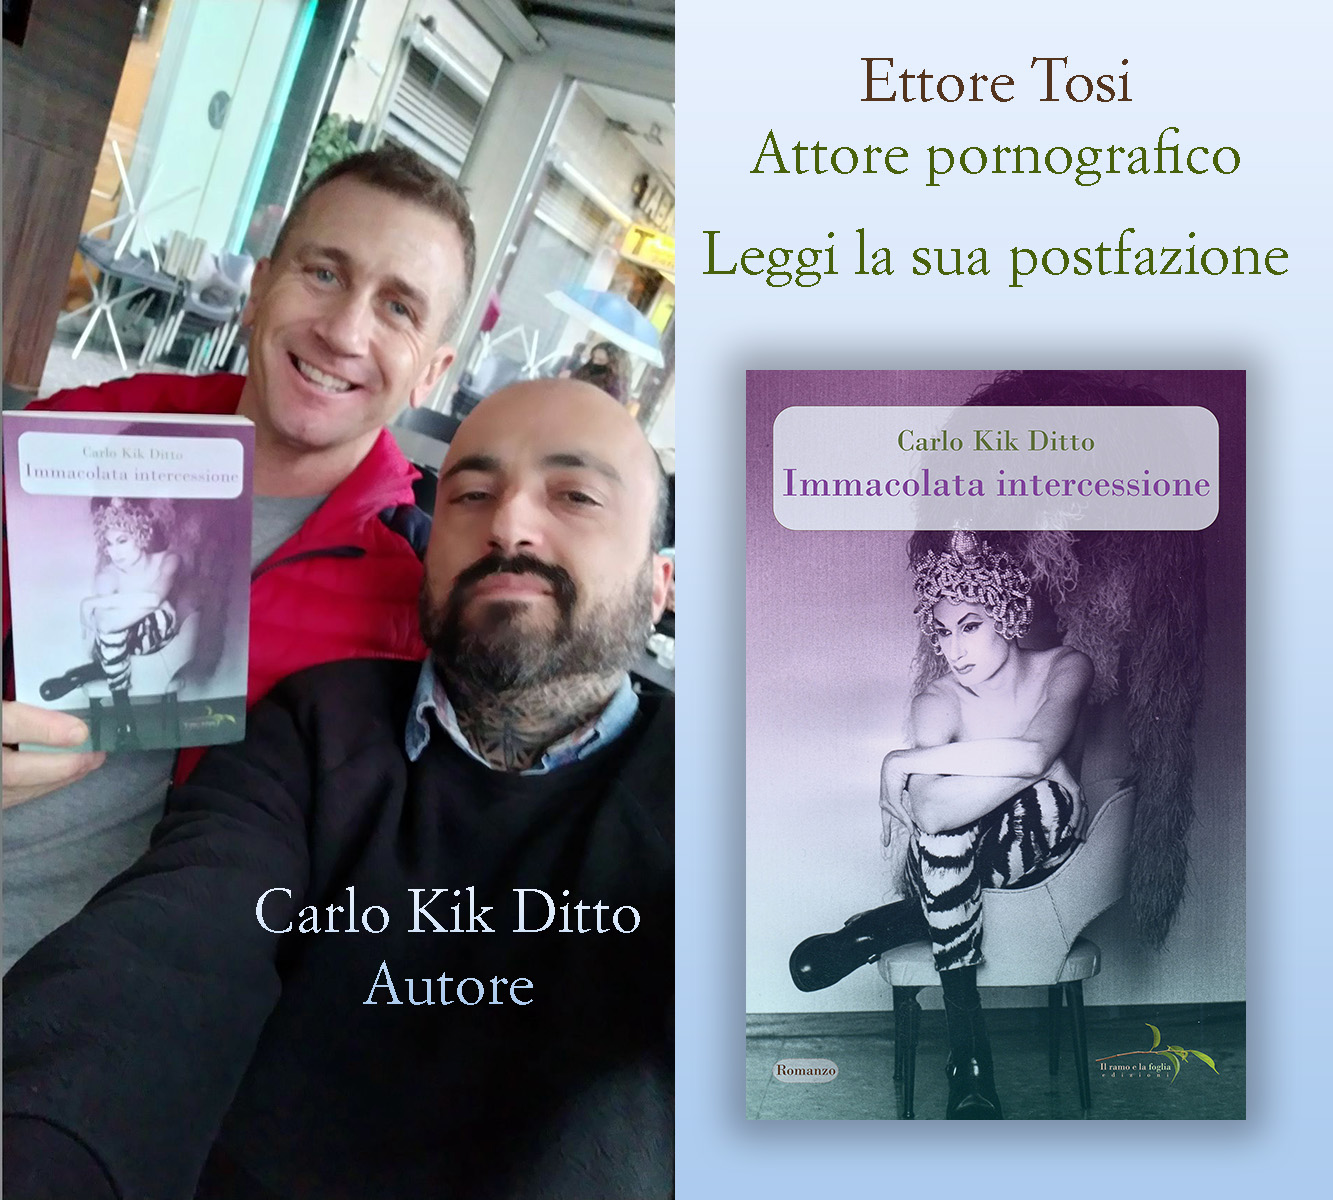 Carlo Kik Ditto insieme a Ettore Tosi